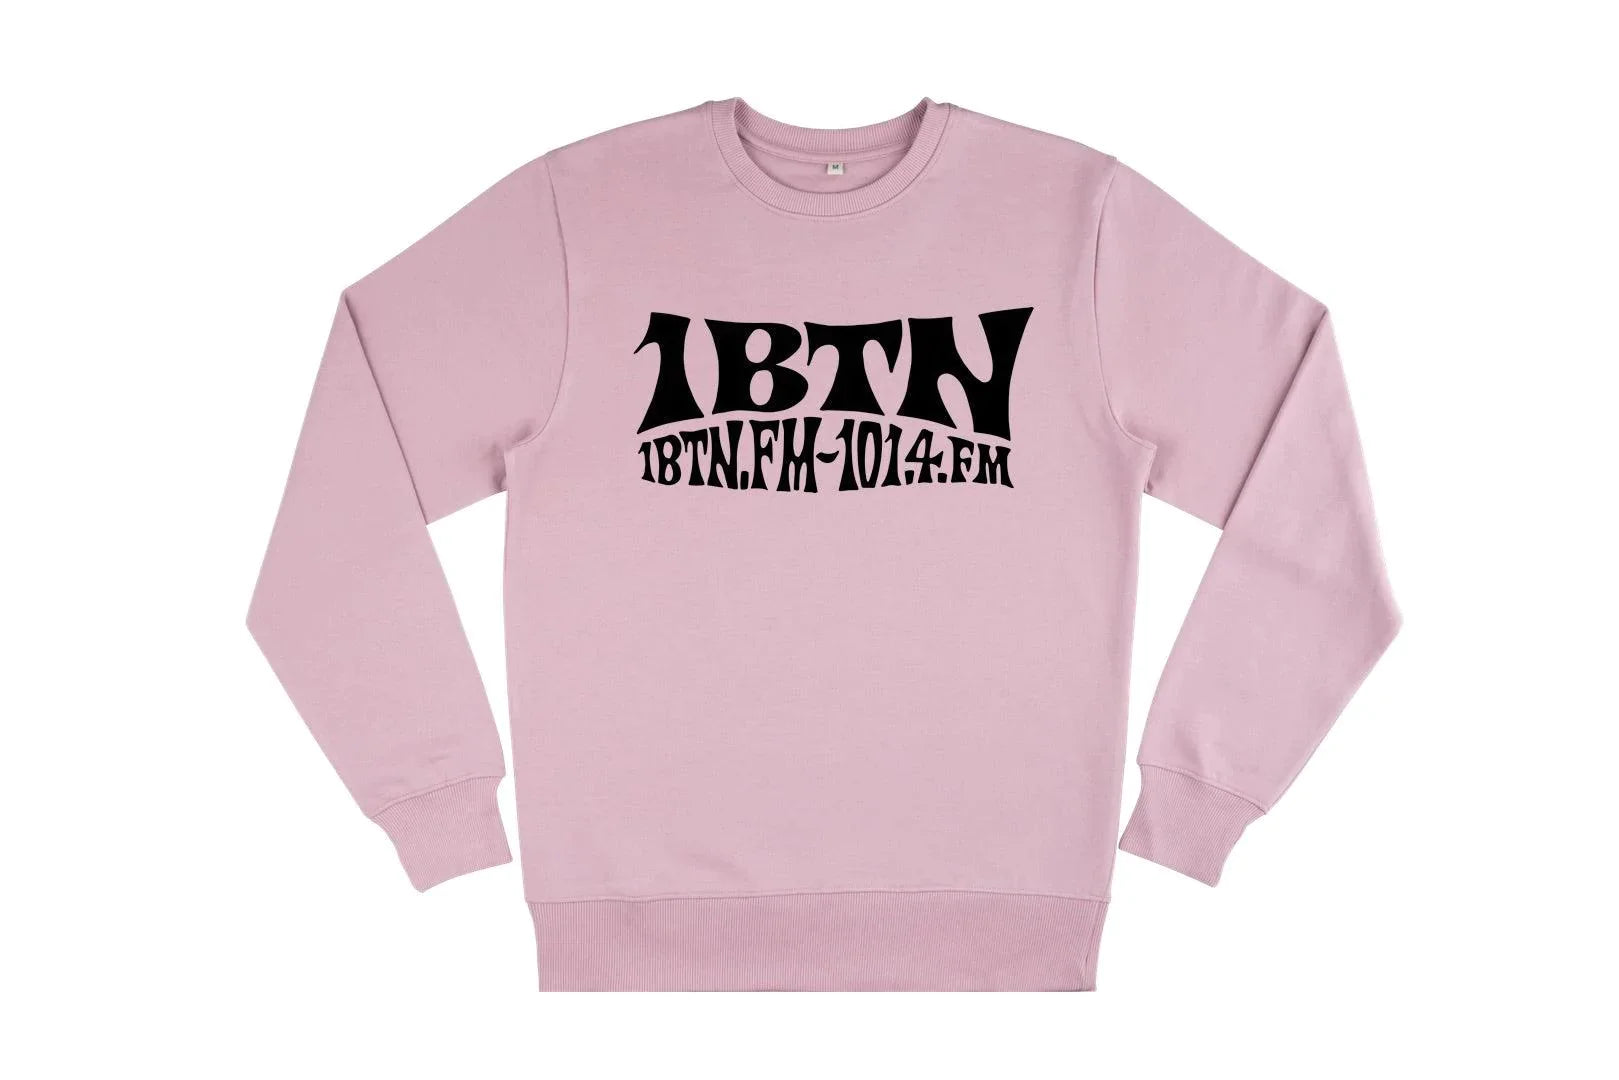 1BTN.FM 101.4 by Swifty: Sweatshirt Official Merchandise of 1BTN.FM (5 Colour Options) - SOUND IS COLOUR